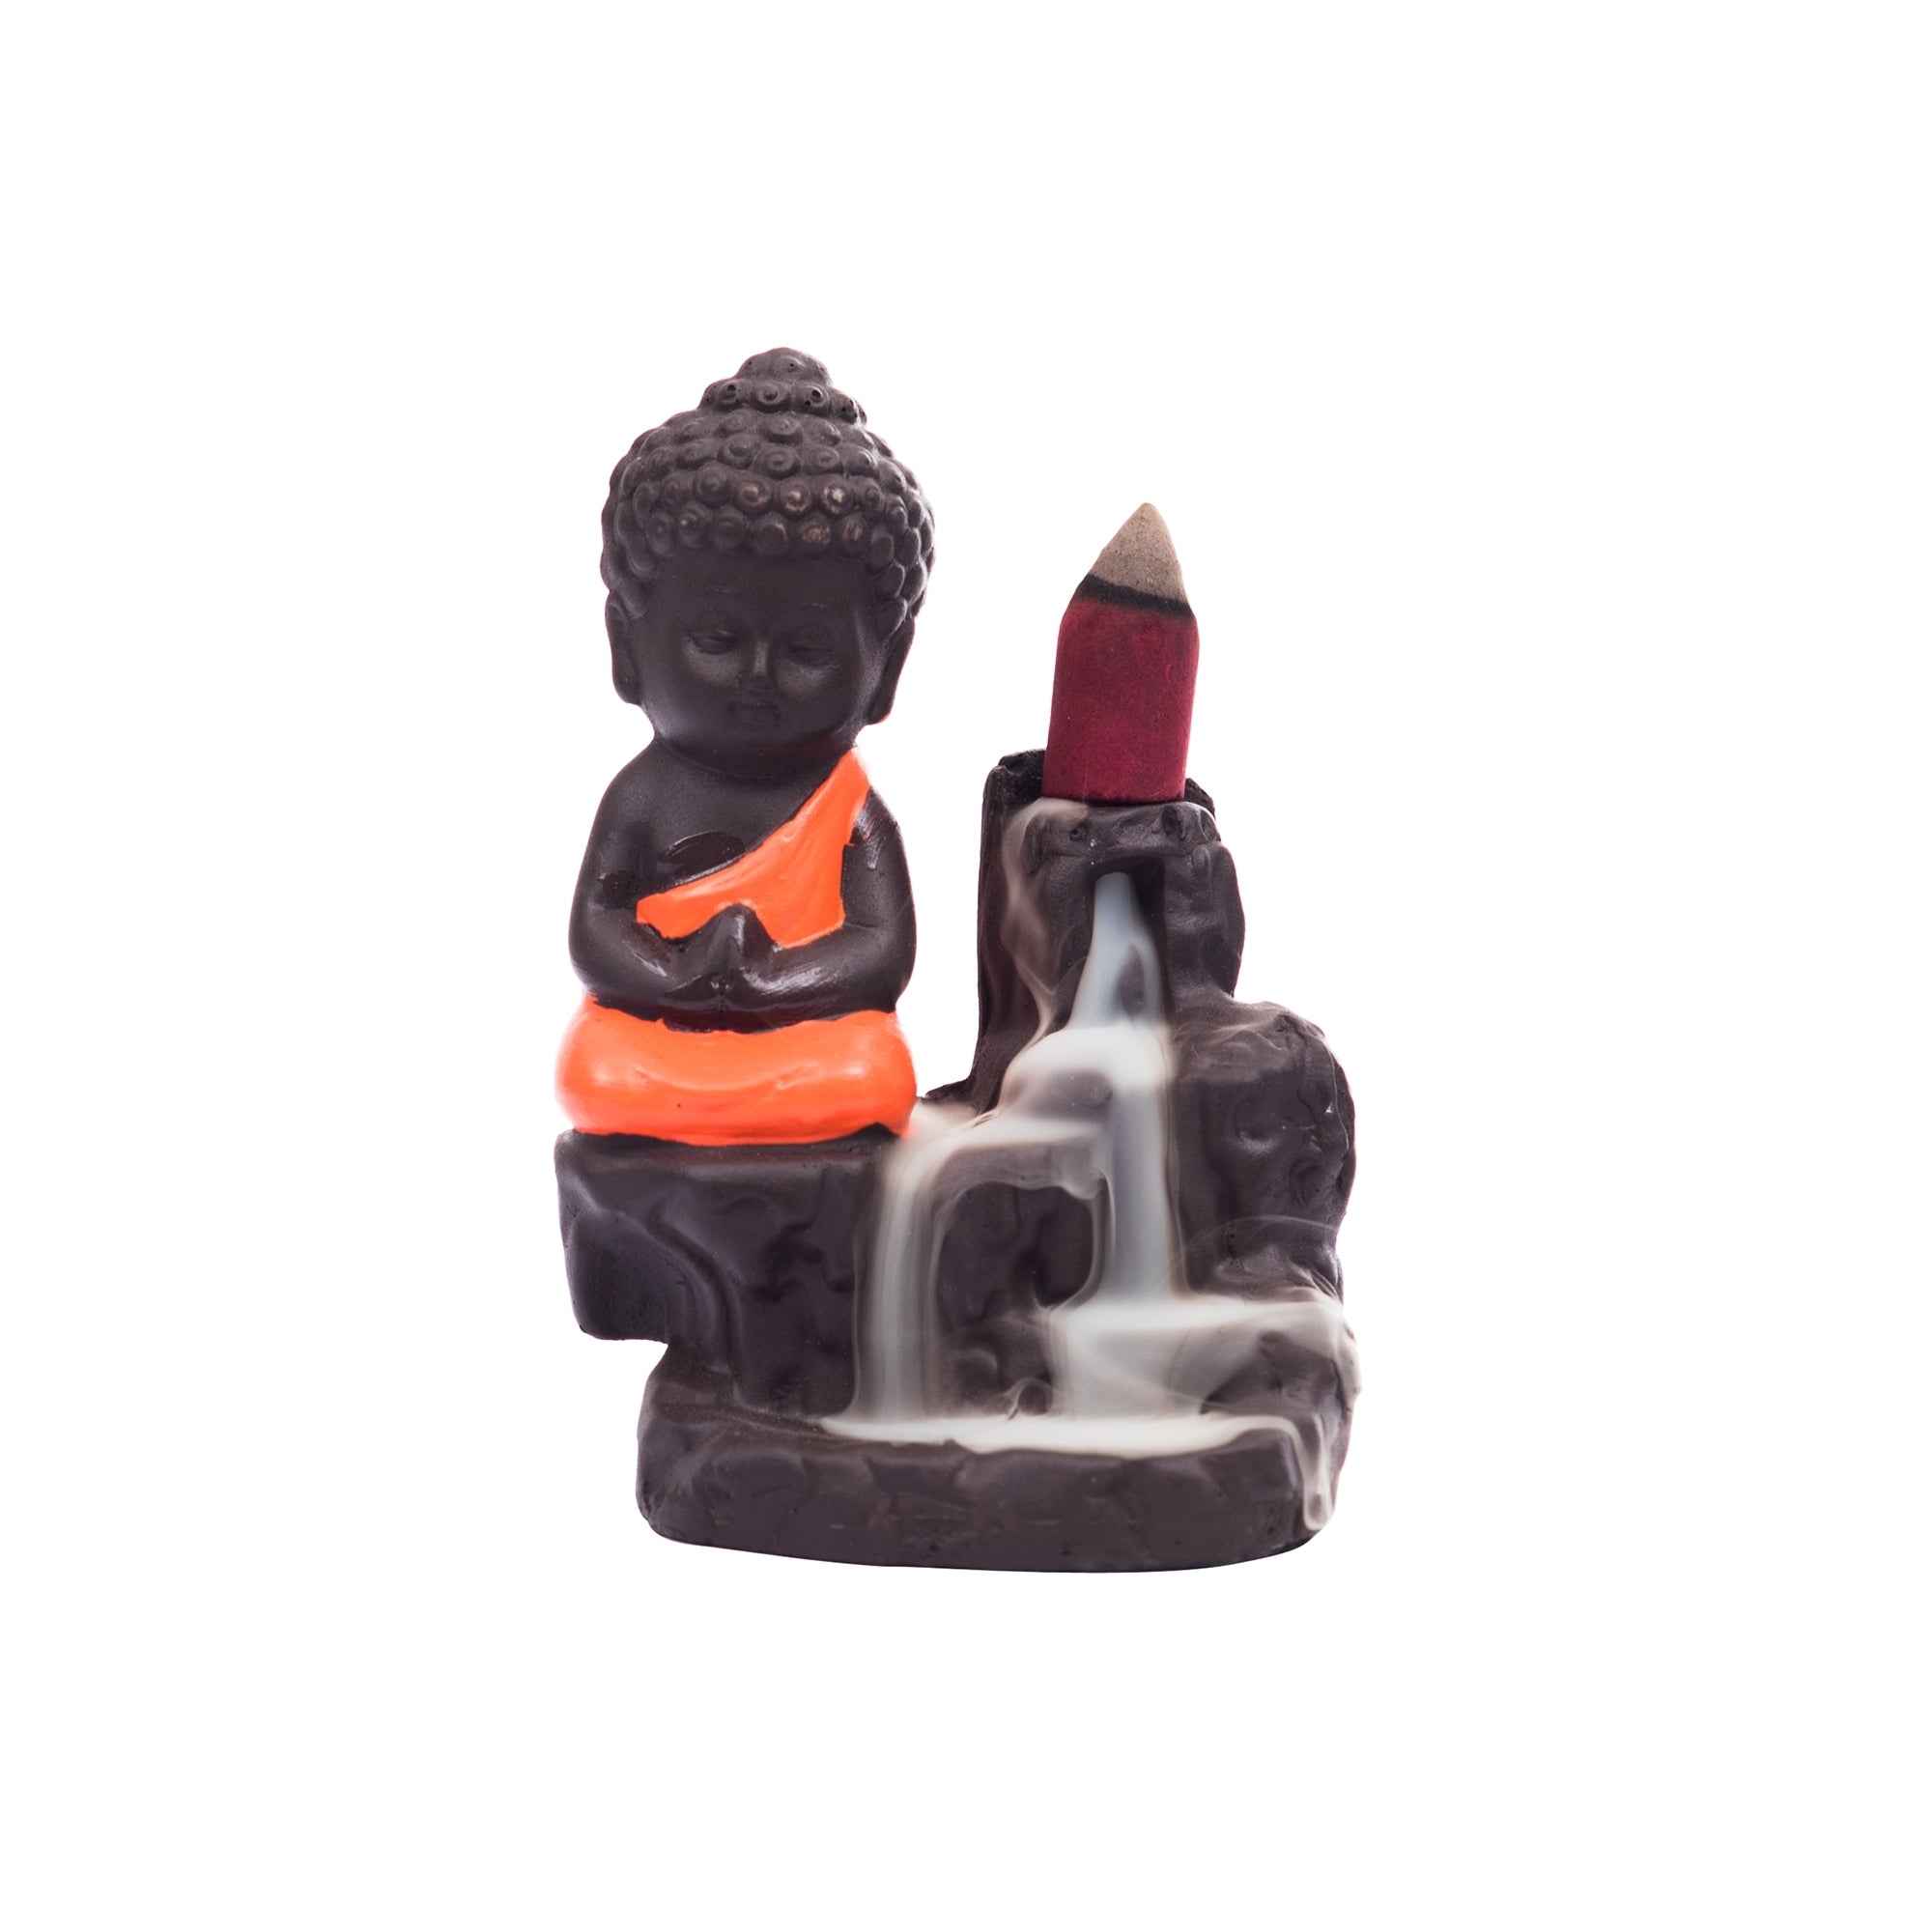 Meditating Monk Buddha Statue Smoke Backflow Cone Incense Holder Decorative Showpiece with 10 free Smoke Backflow Scented Cone Incenses(Orange and Brown) 2